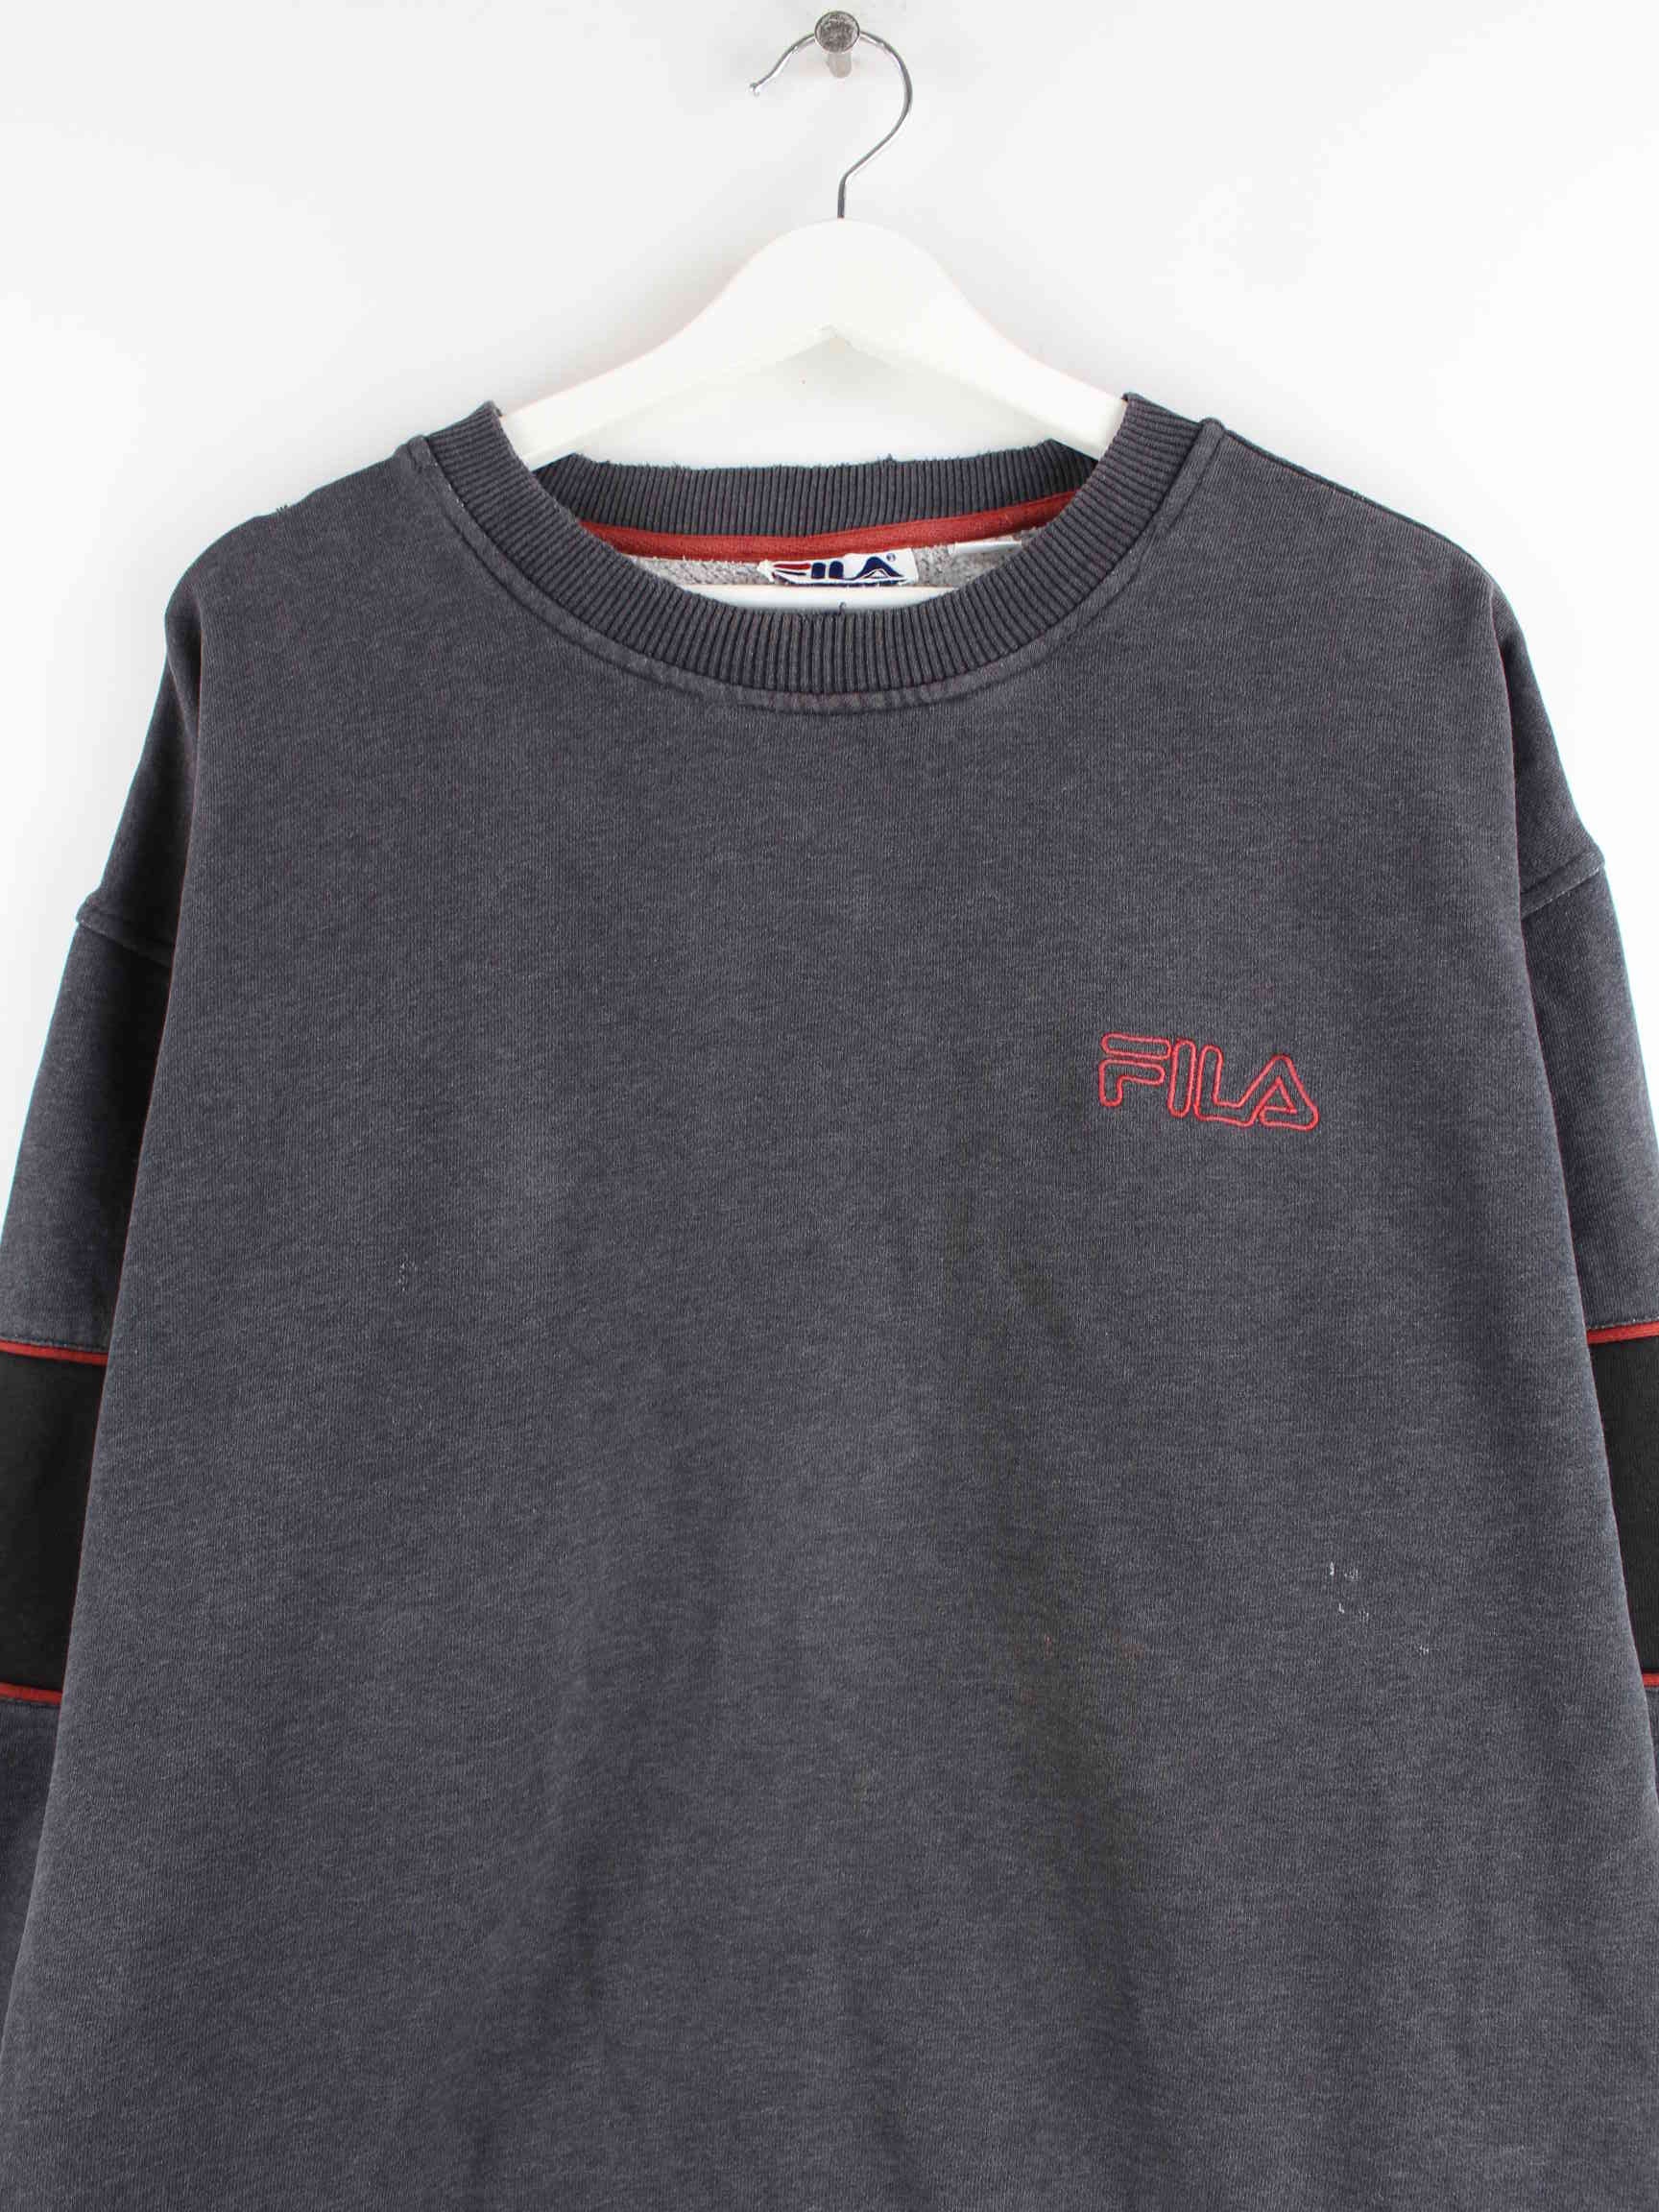 Fila 90s Vintage Embroidered Sweater Grau L (detail image 1)